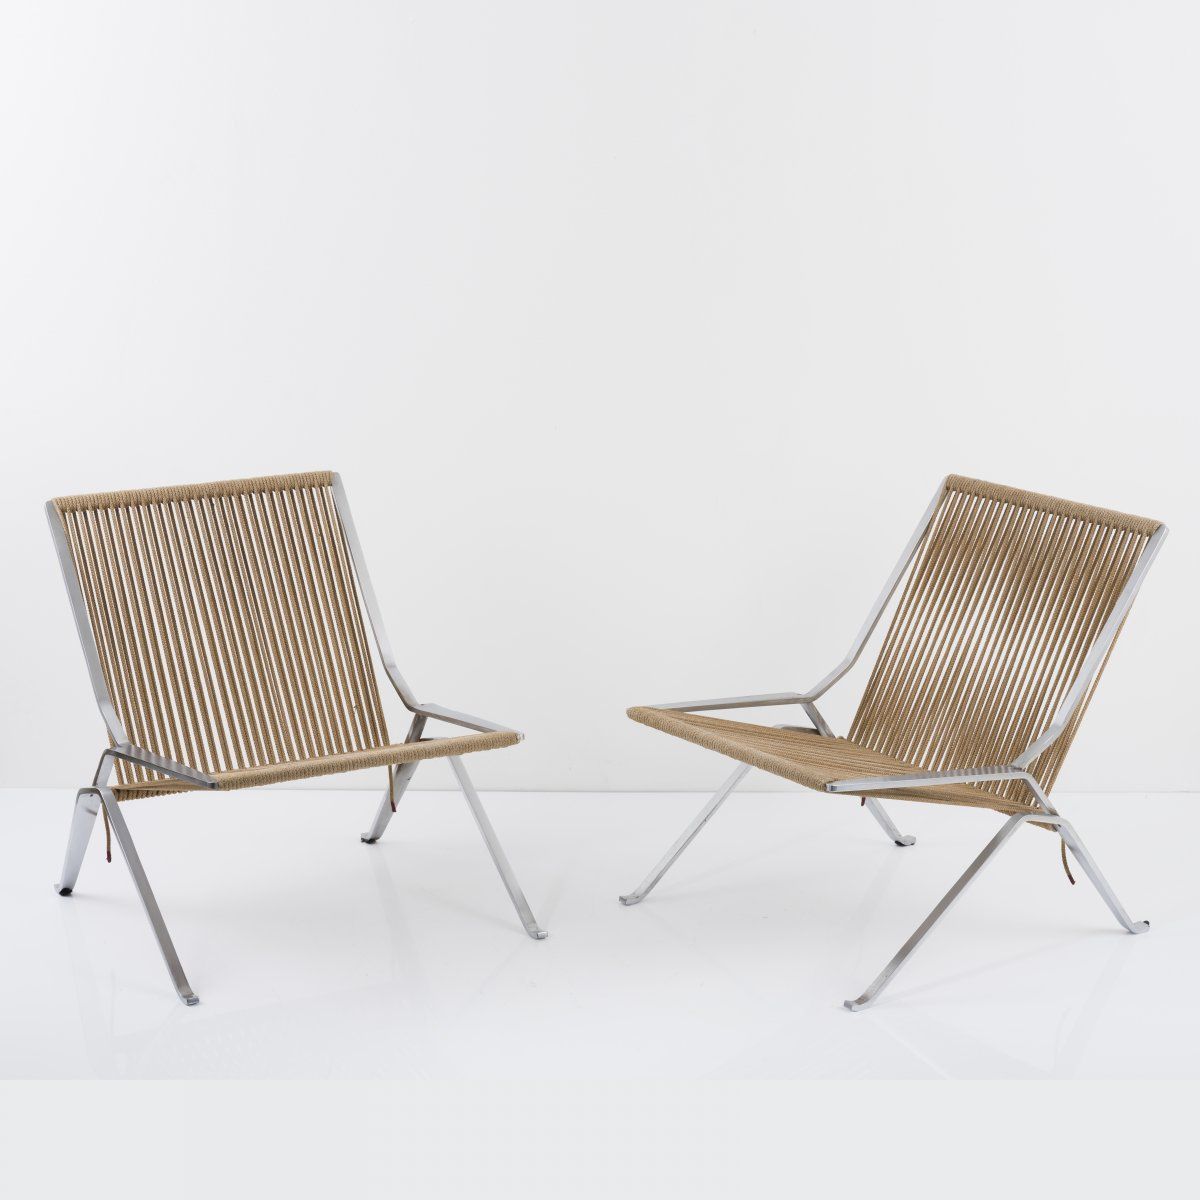 Null Poul Kjaerholm, 2 'PK 25' - 'Element chairs', 1952, H. 73 x 68.5 x 75 cm.由F&hellip;